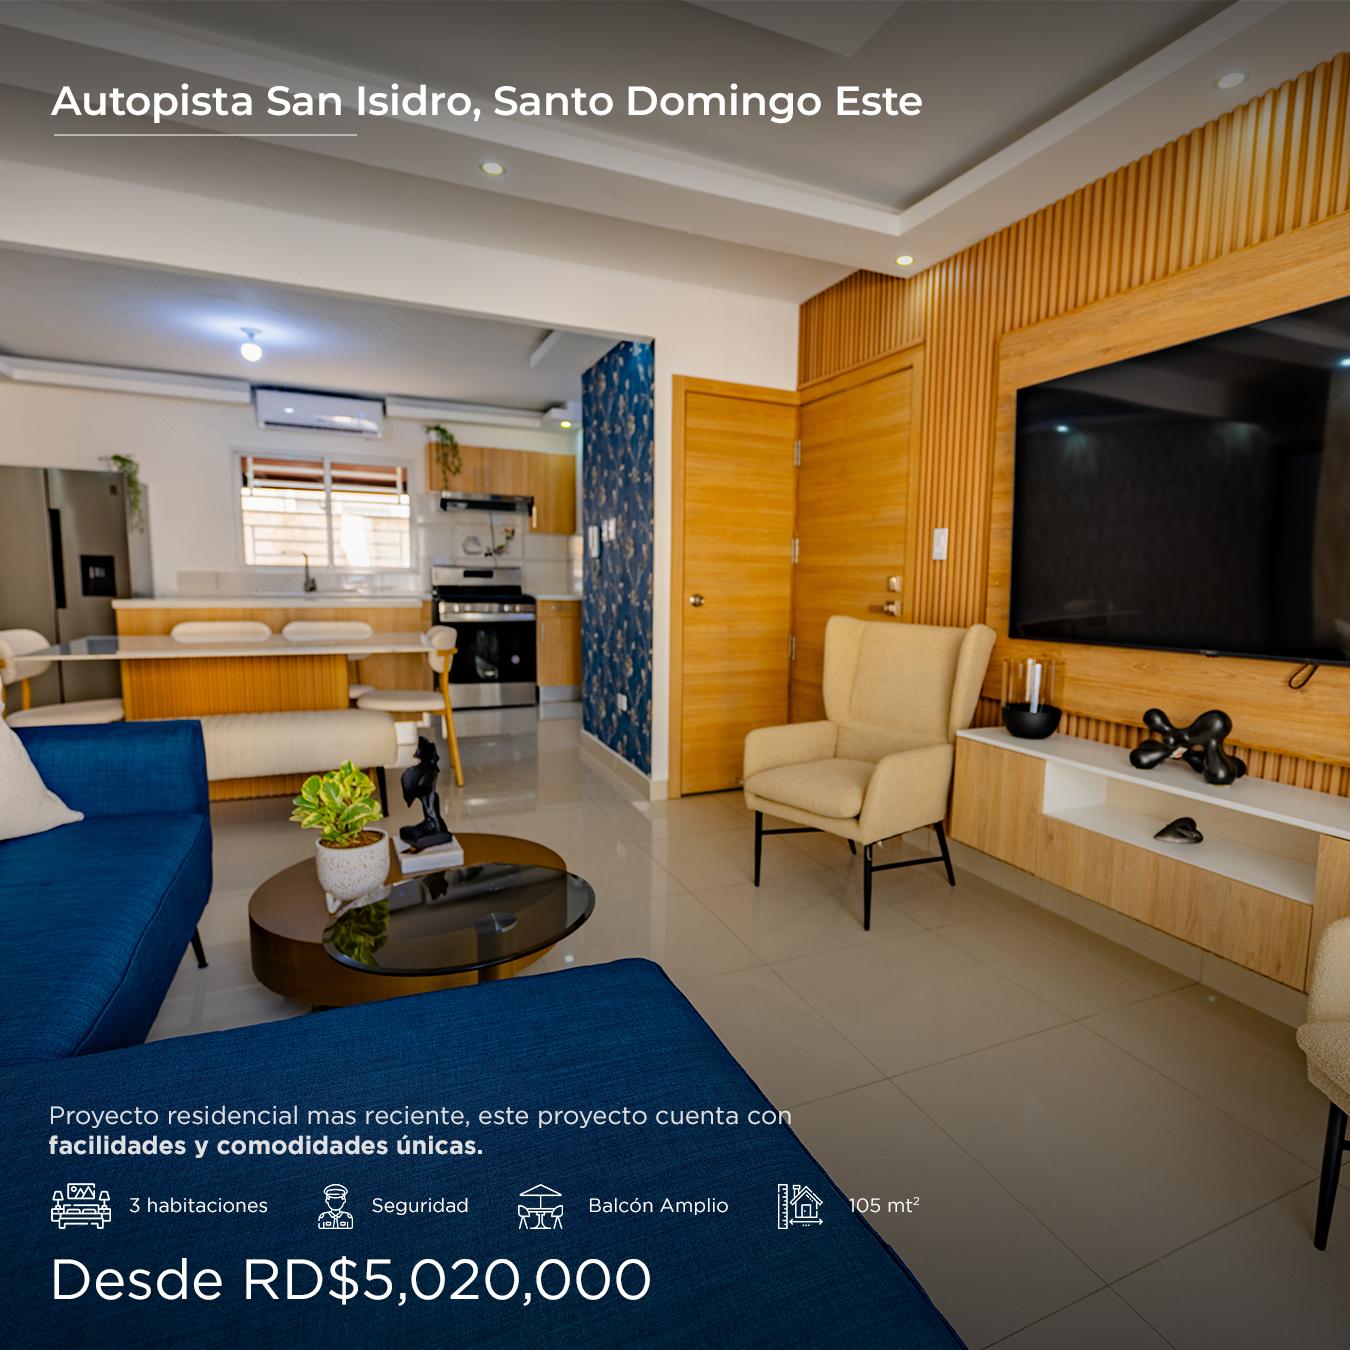 Apartamentos en venta en Santo Domingo Este Autopista San Isidro Foto 7213996-4.jpg